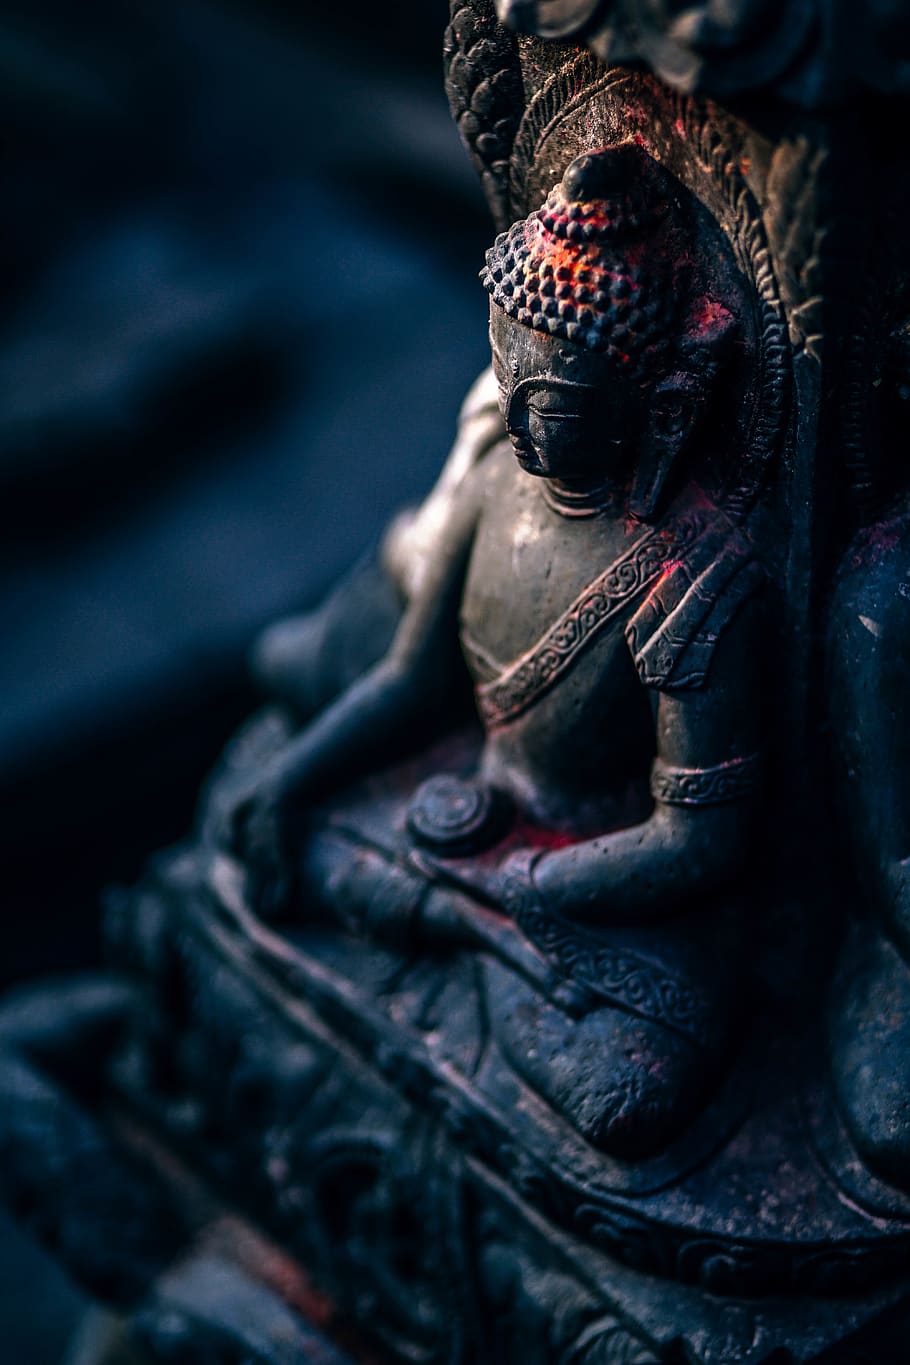 Page 3 | Meditation Buddha Wallpaper Images - Free Download on Freepik